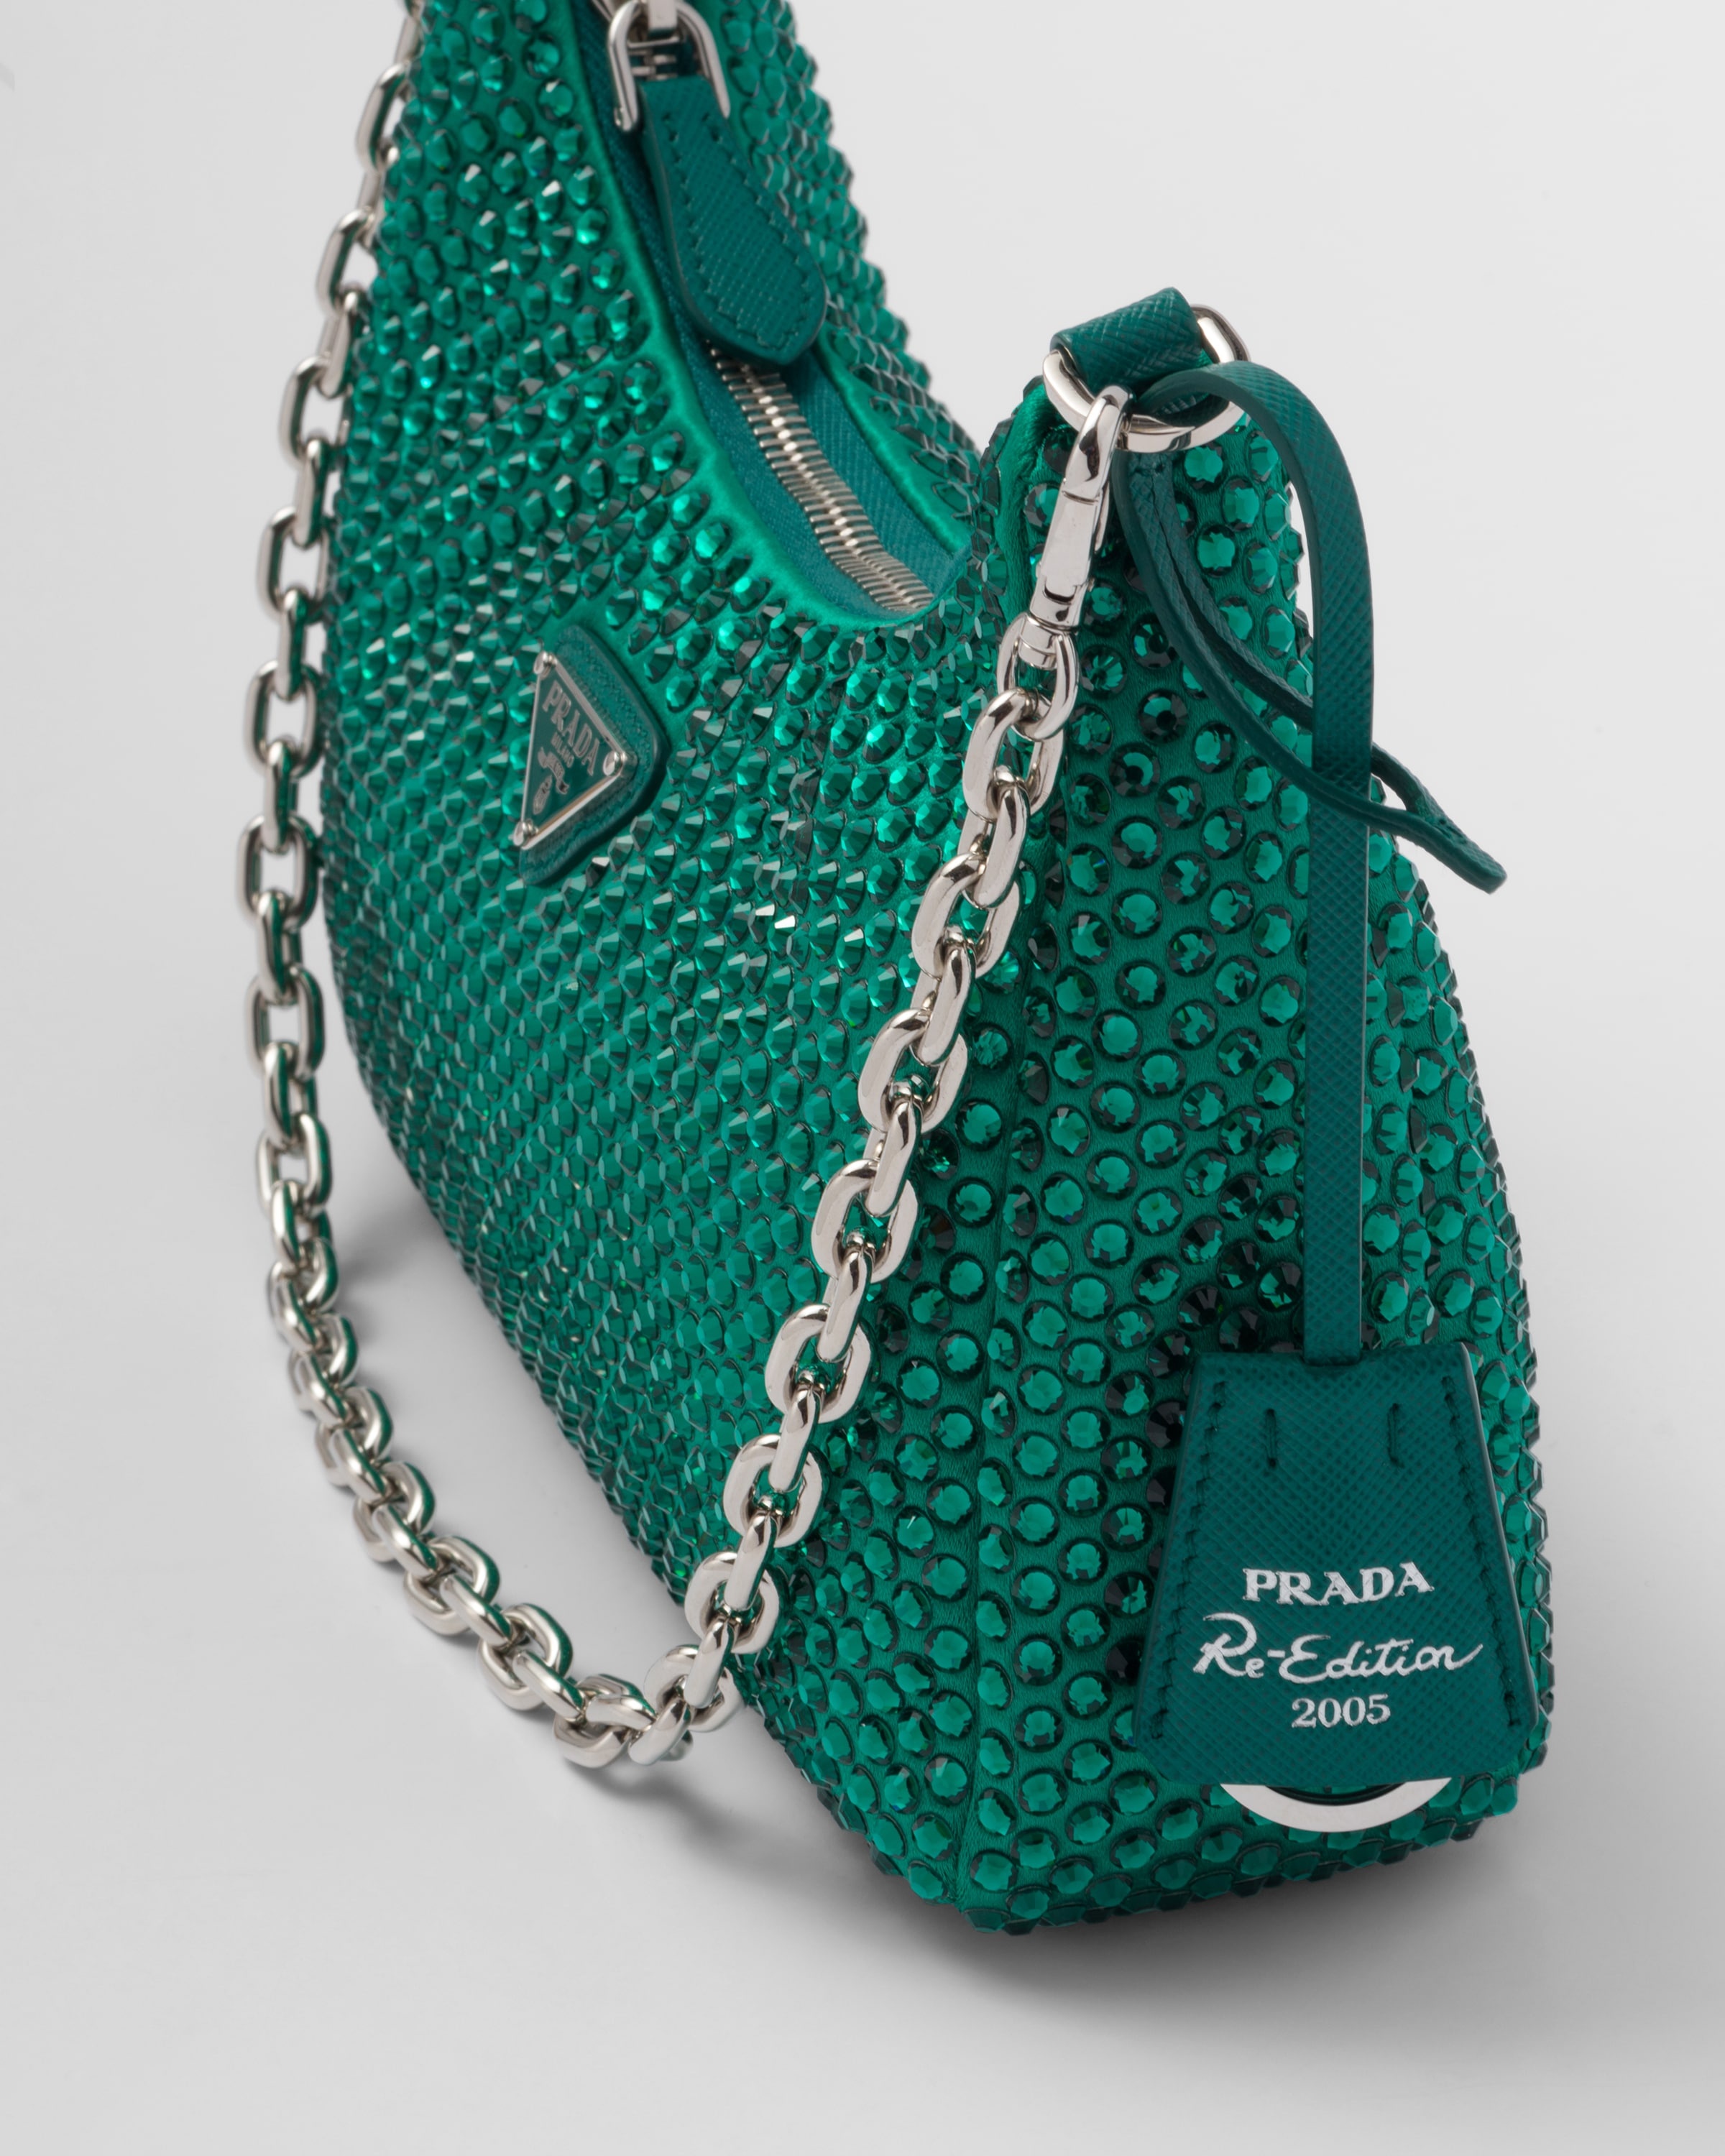 Prada Re-Edition 2005 satin bag with crystals - 5